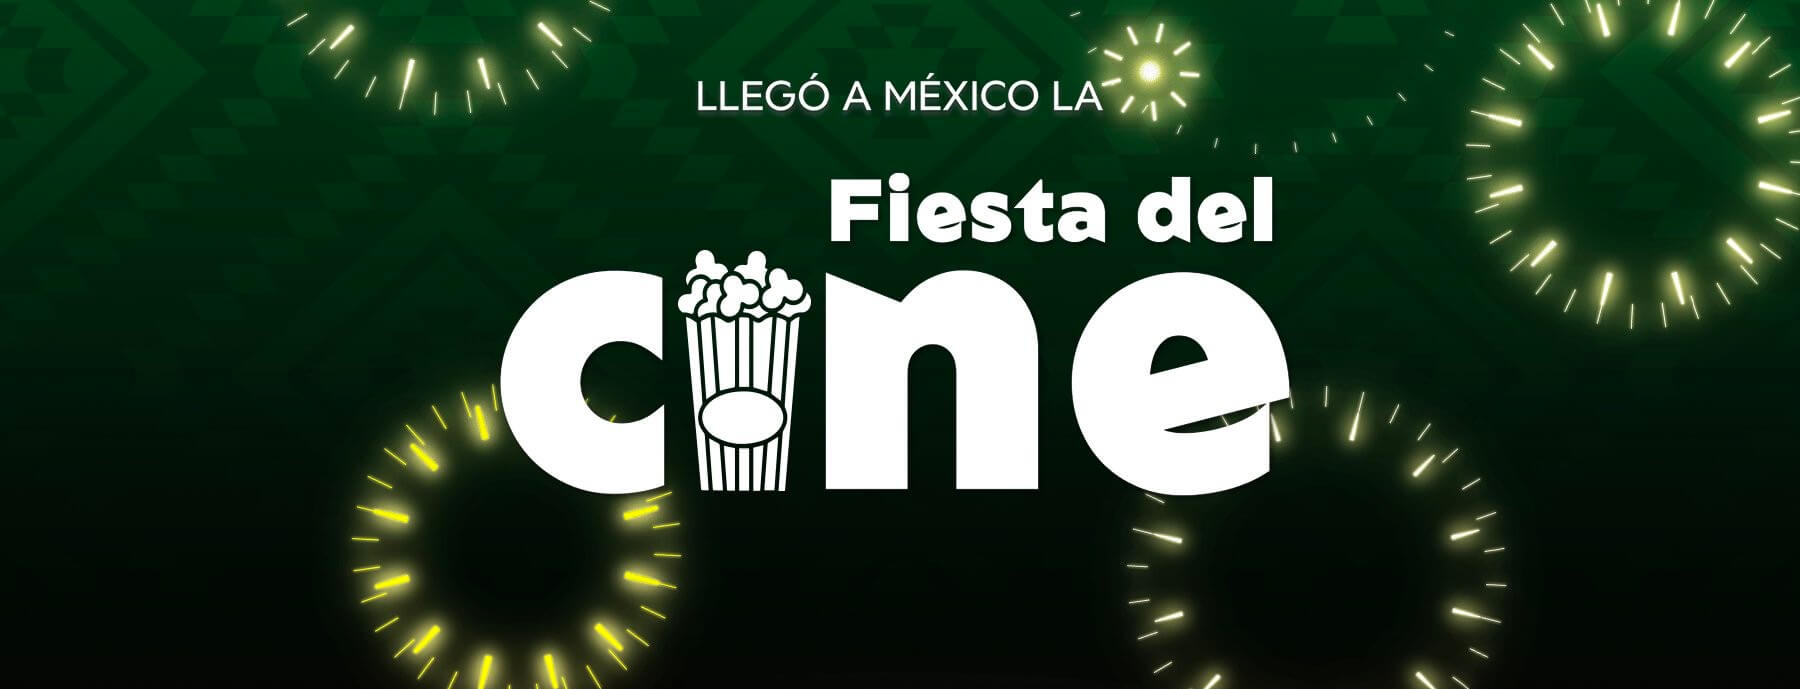 fiesta-del-cine-mexico